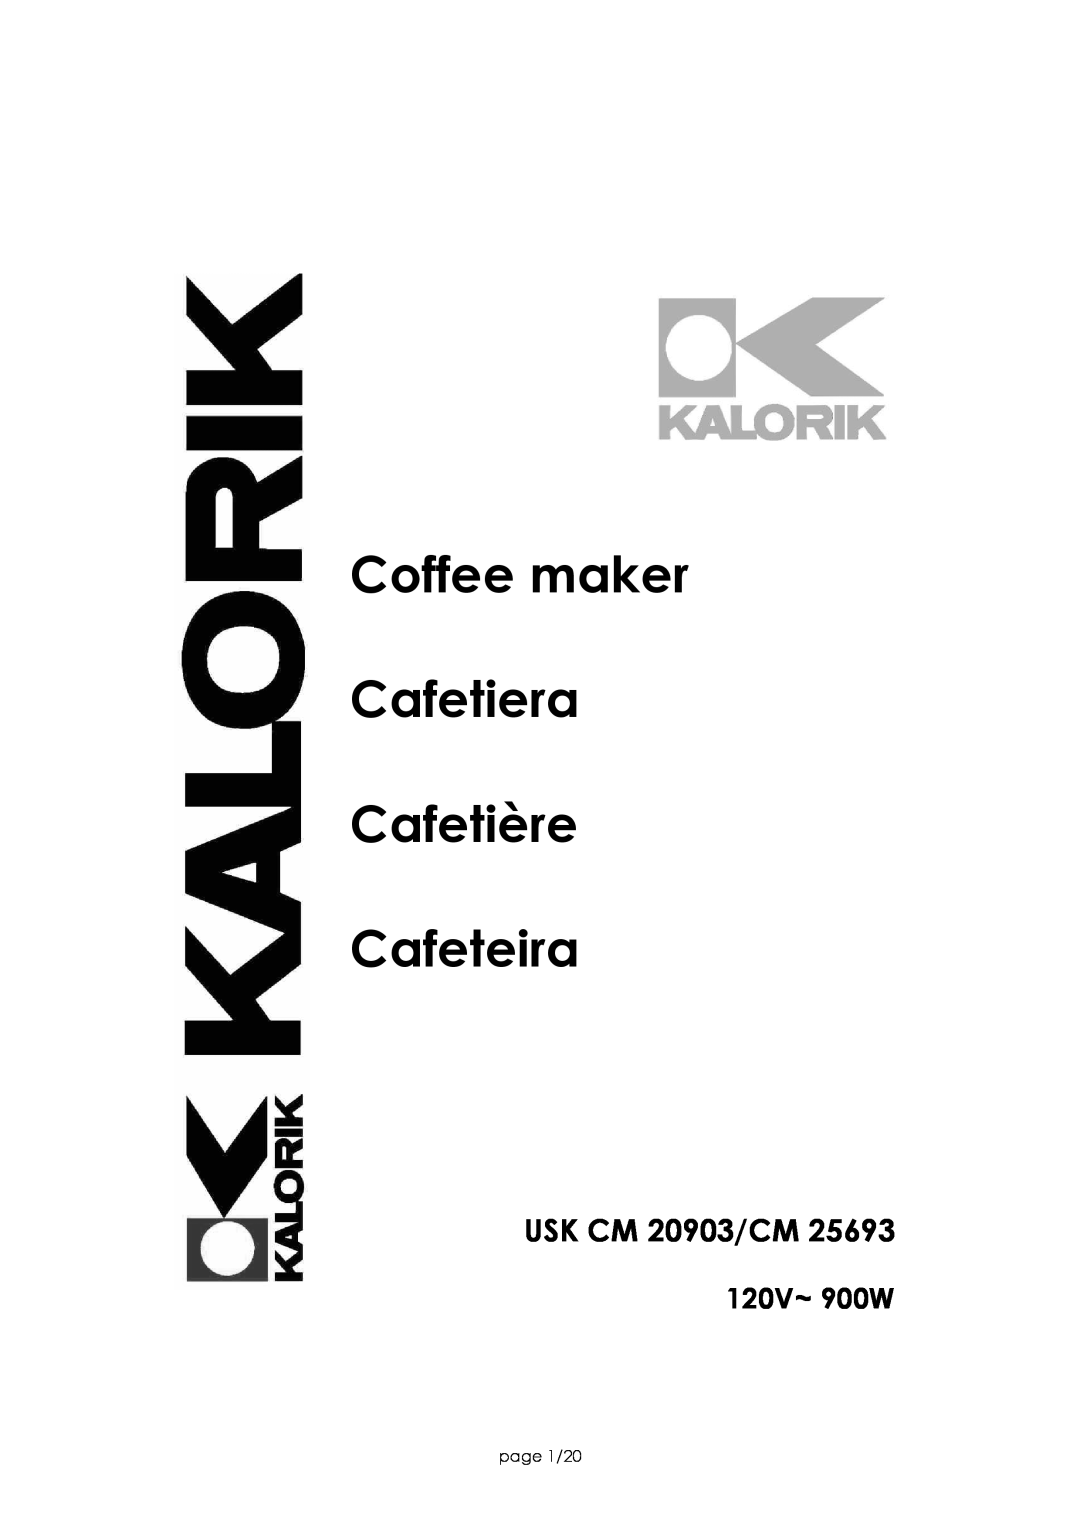 Kalorik CM 25693 manual 120V~ 900W, Coffee maker Cafetiera Cafetière Cafeteira, USK CM 20903/CM, page 1/20 